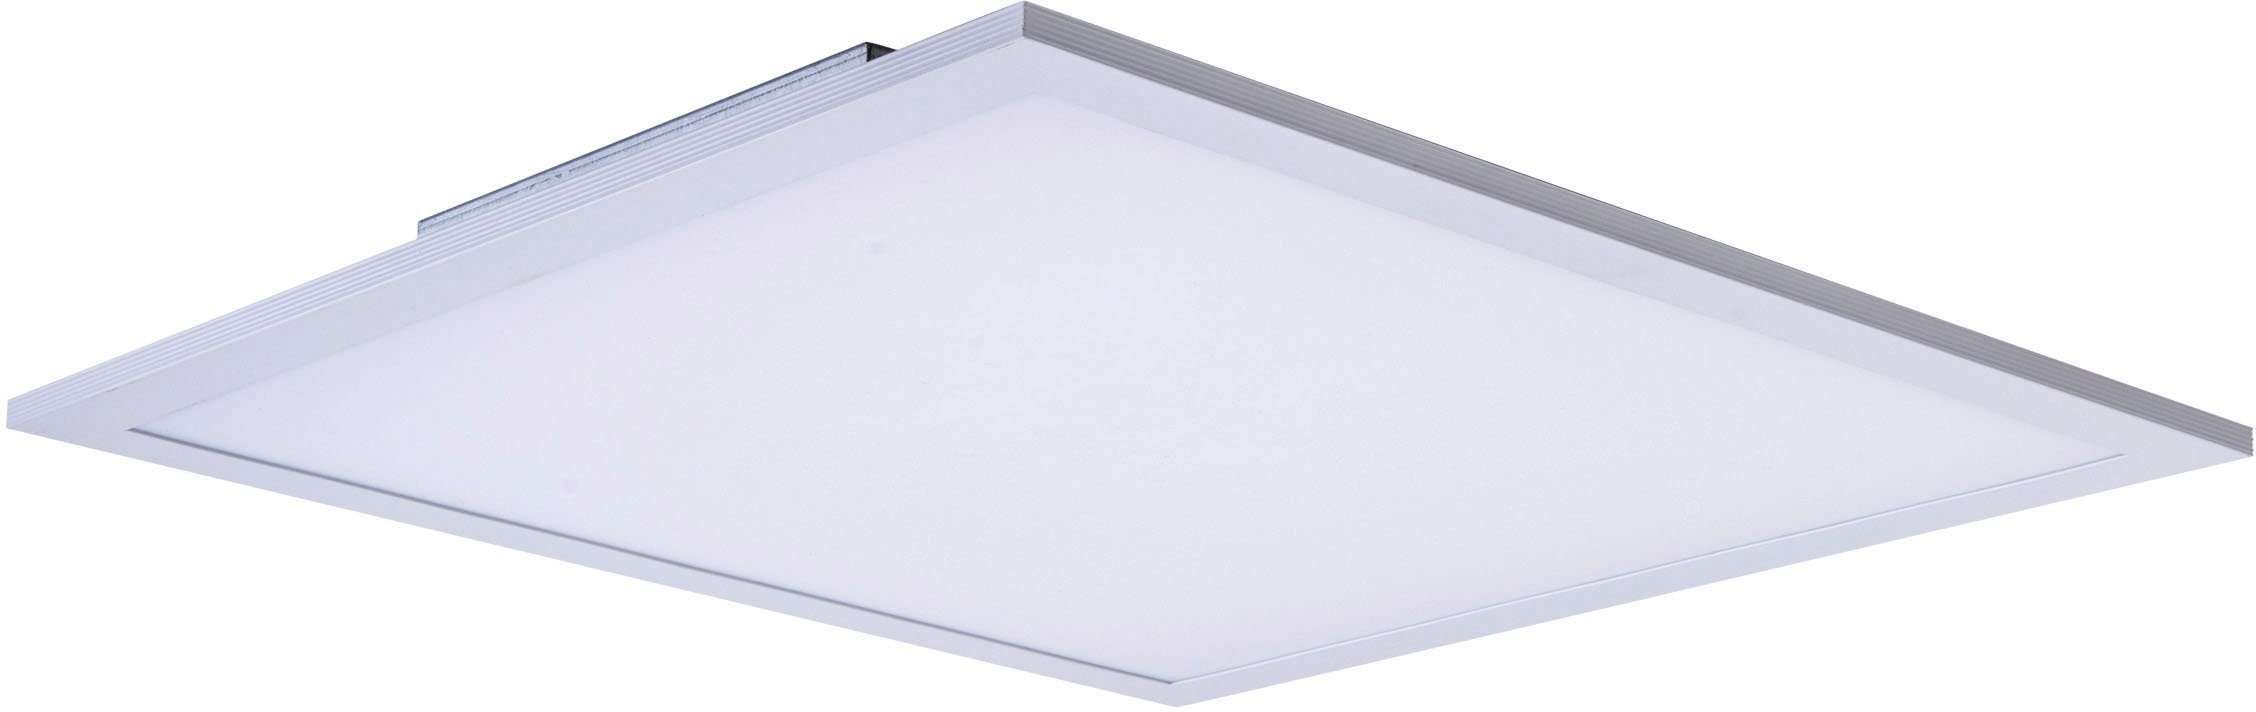 Aufbaupanel Neutralweiß, näve LED, 120 LED Panel LED Nicola, fest integriert, Lichtfarbe weiß neutralweiß 6cm, H: 45x45cm,